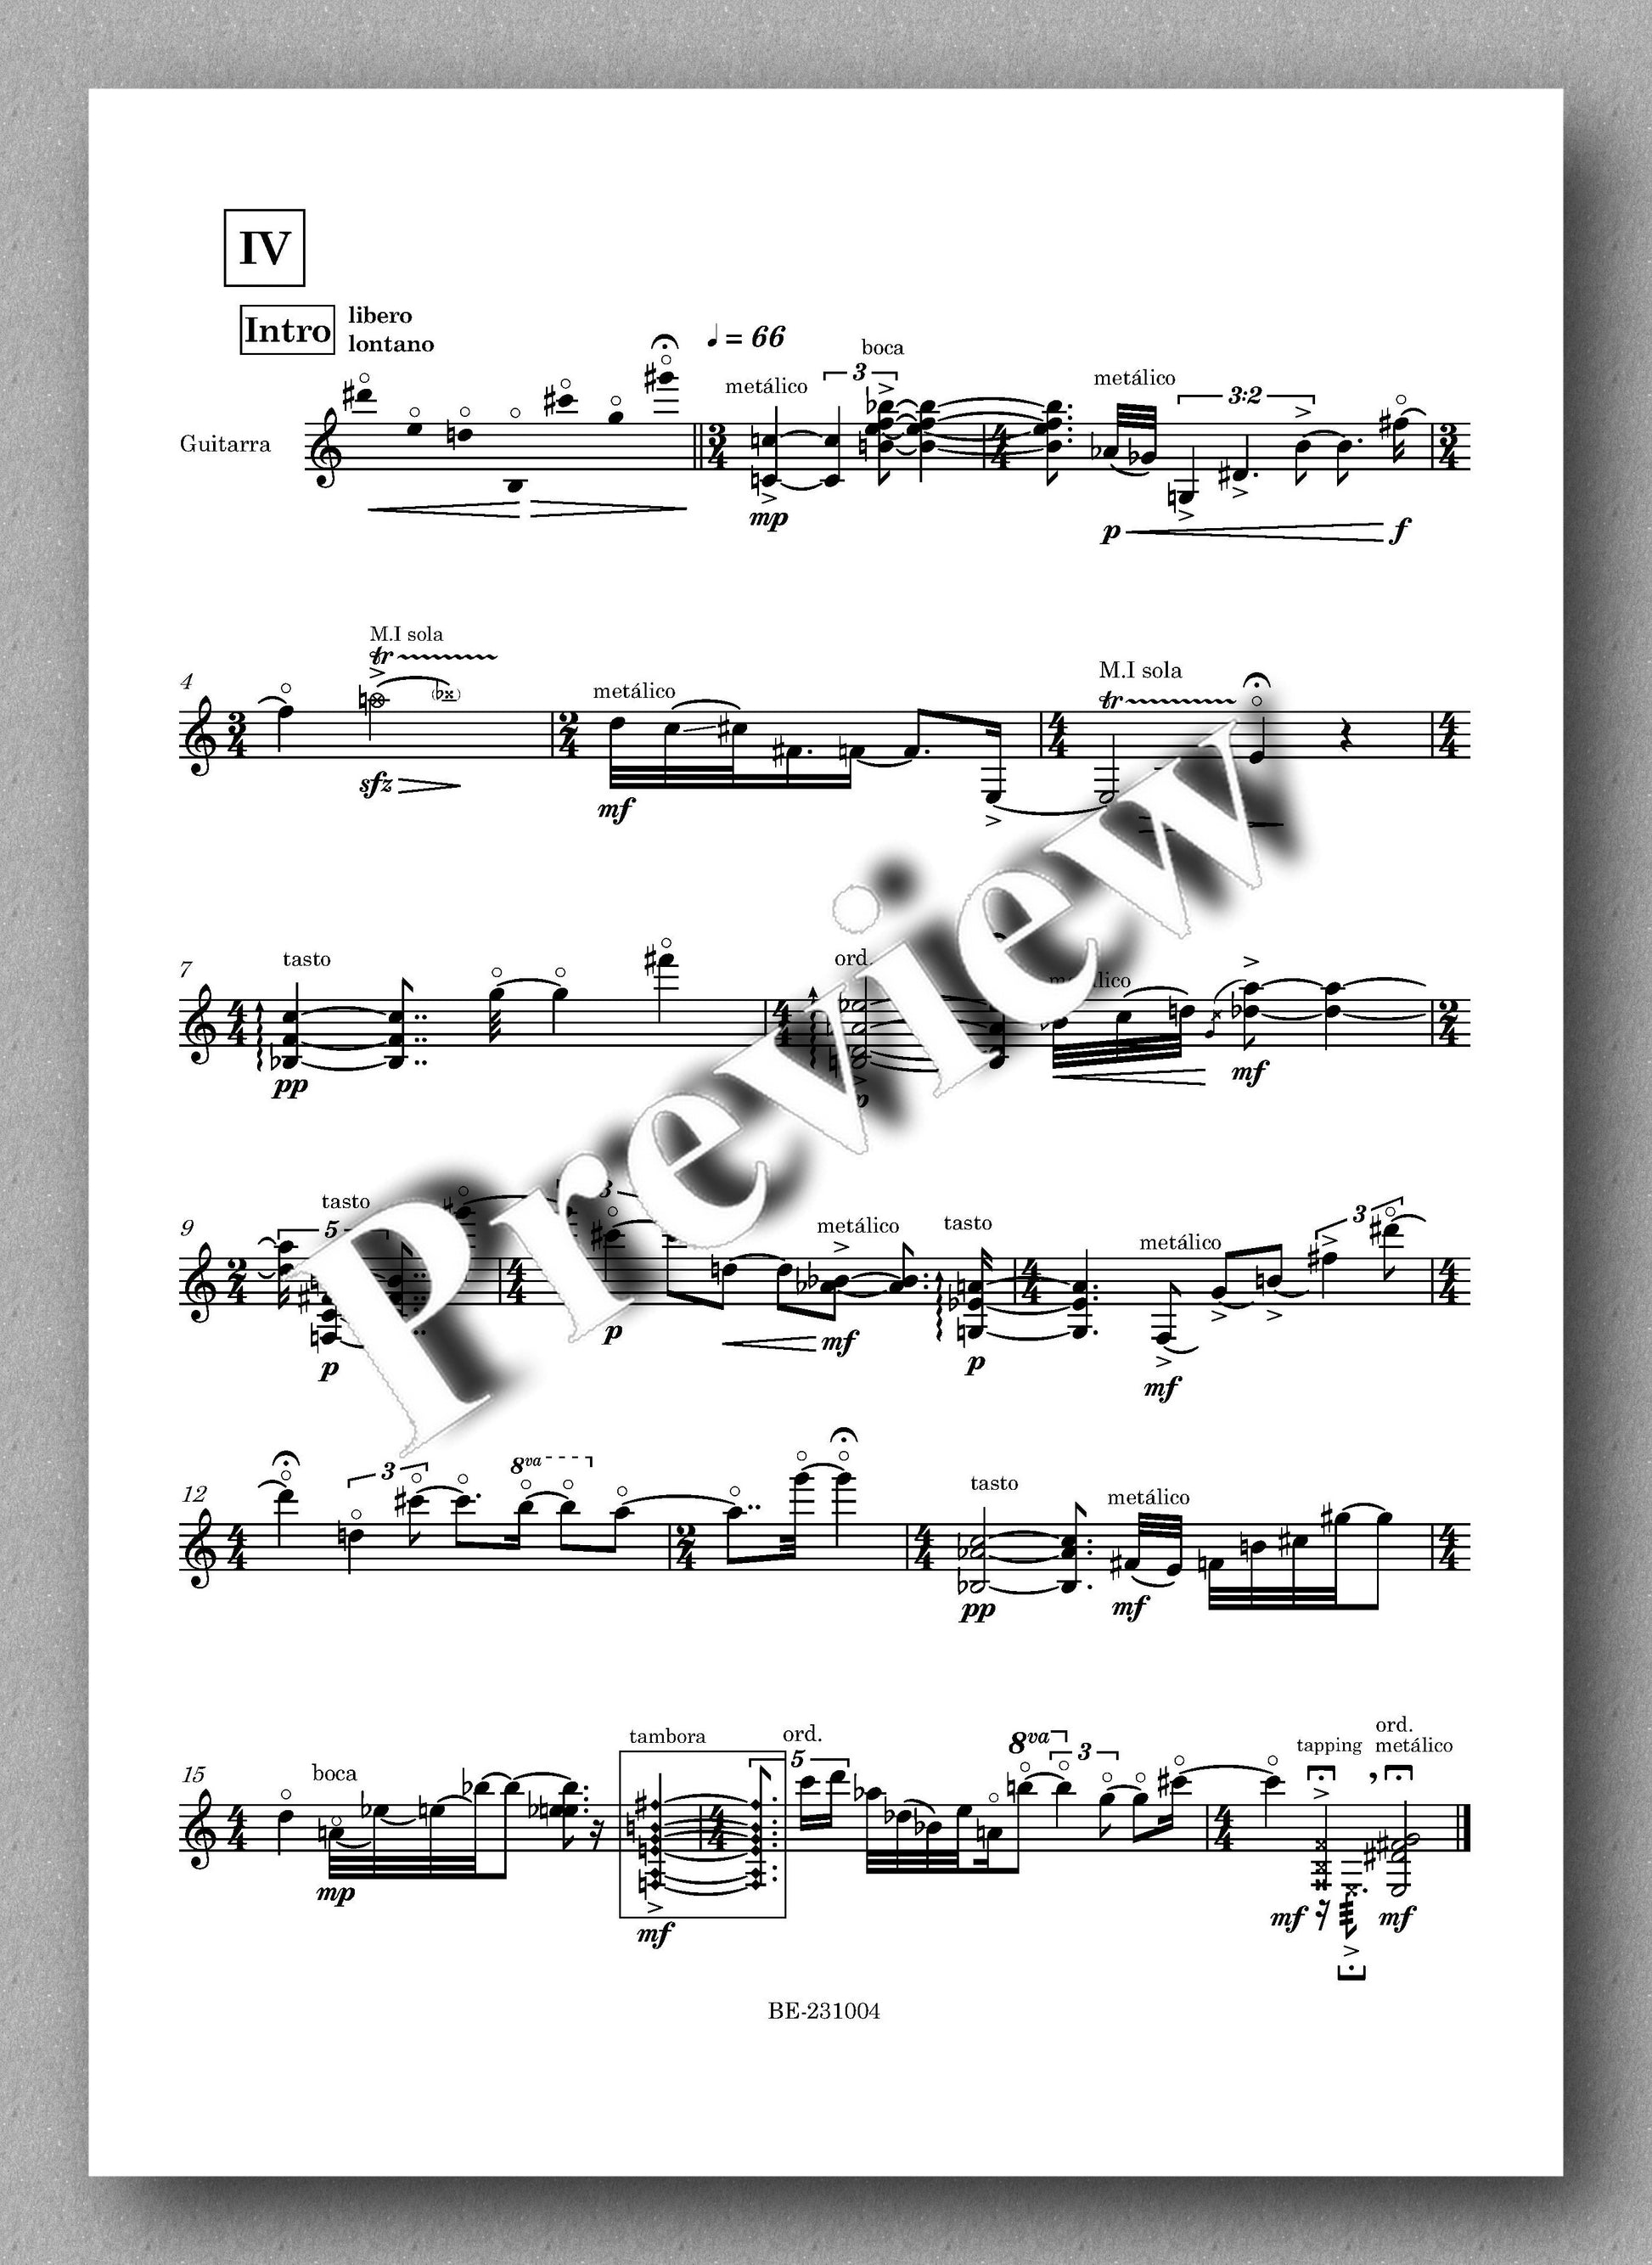 José Baroni, Miniaturas - preview of the music score 4